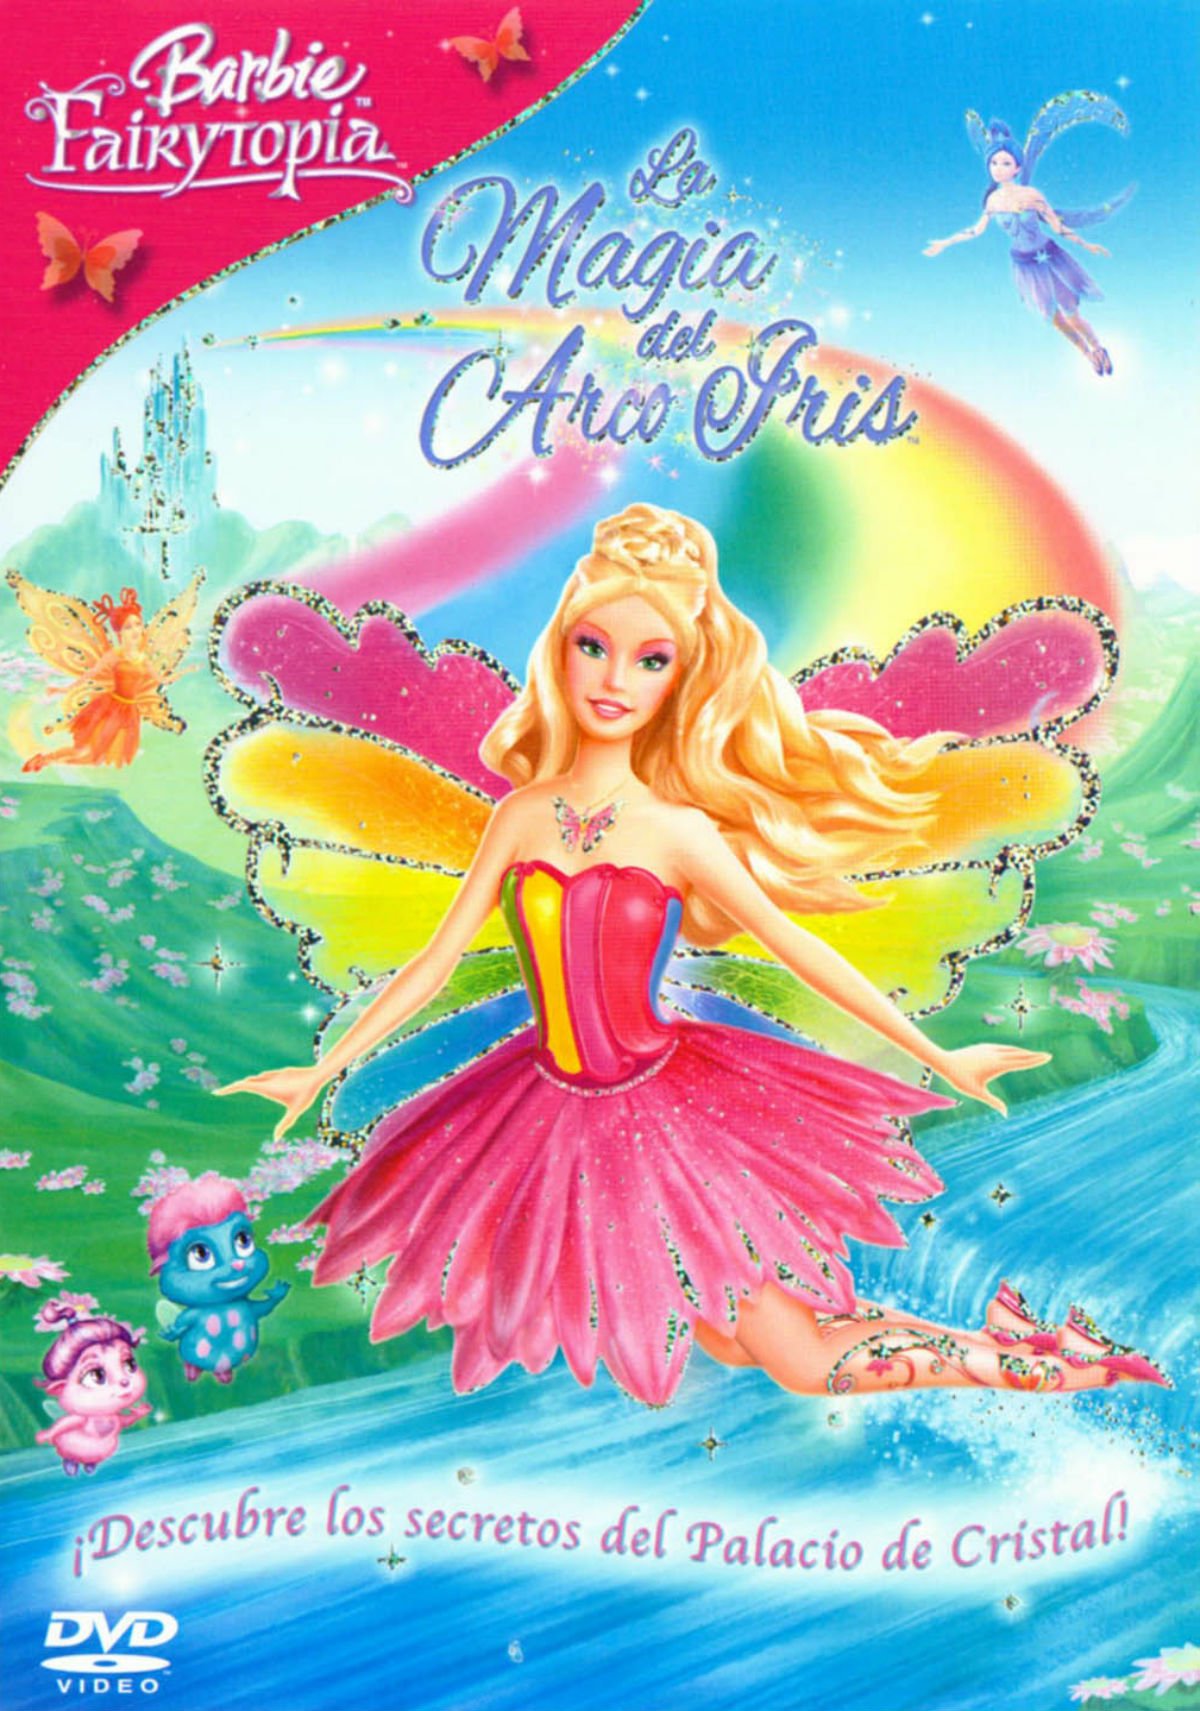 Convertir Converger Egoísmo Barbie Fairytopia: La magia del Arco Iris - Película 2007 - SensaCine.com